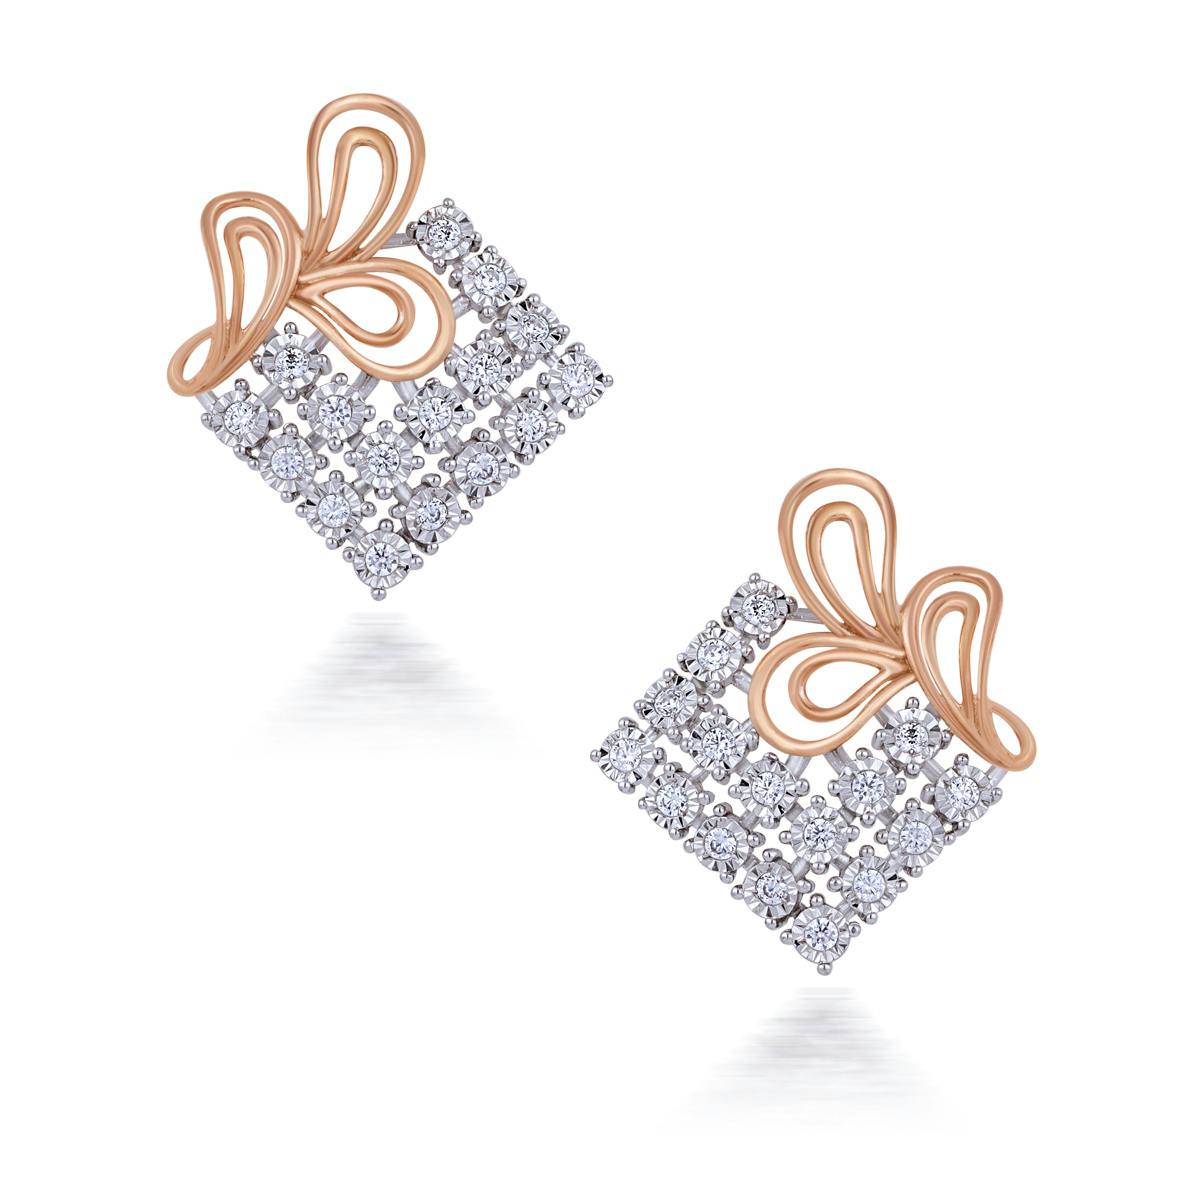 Gift of Sparkle earrings